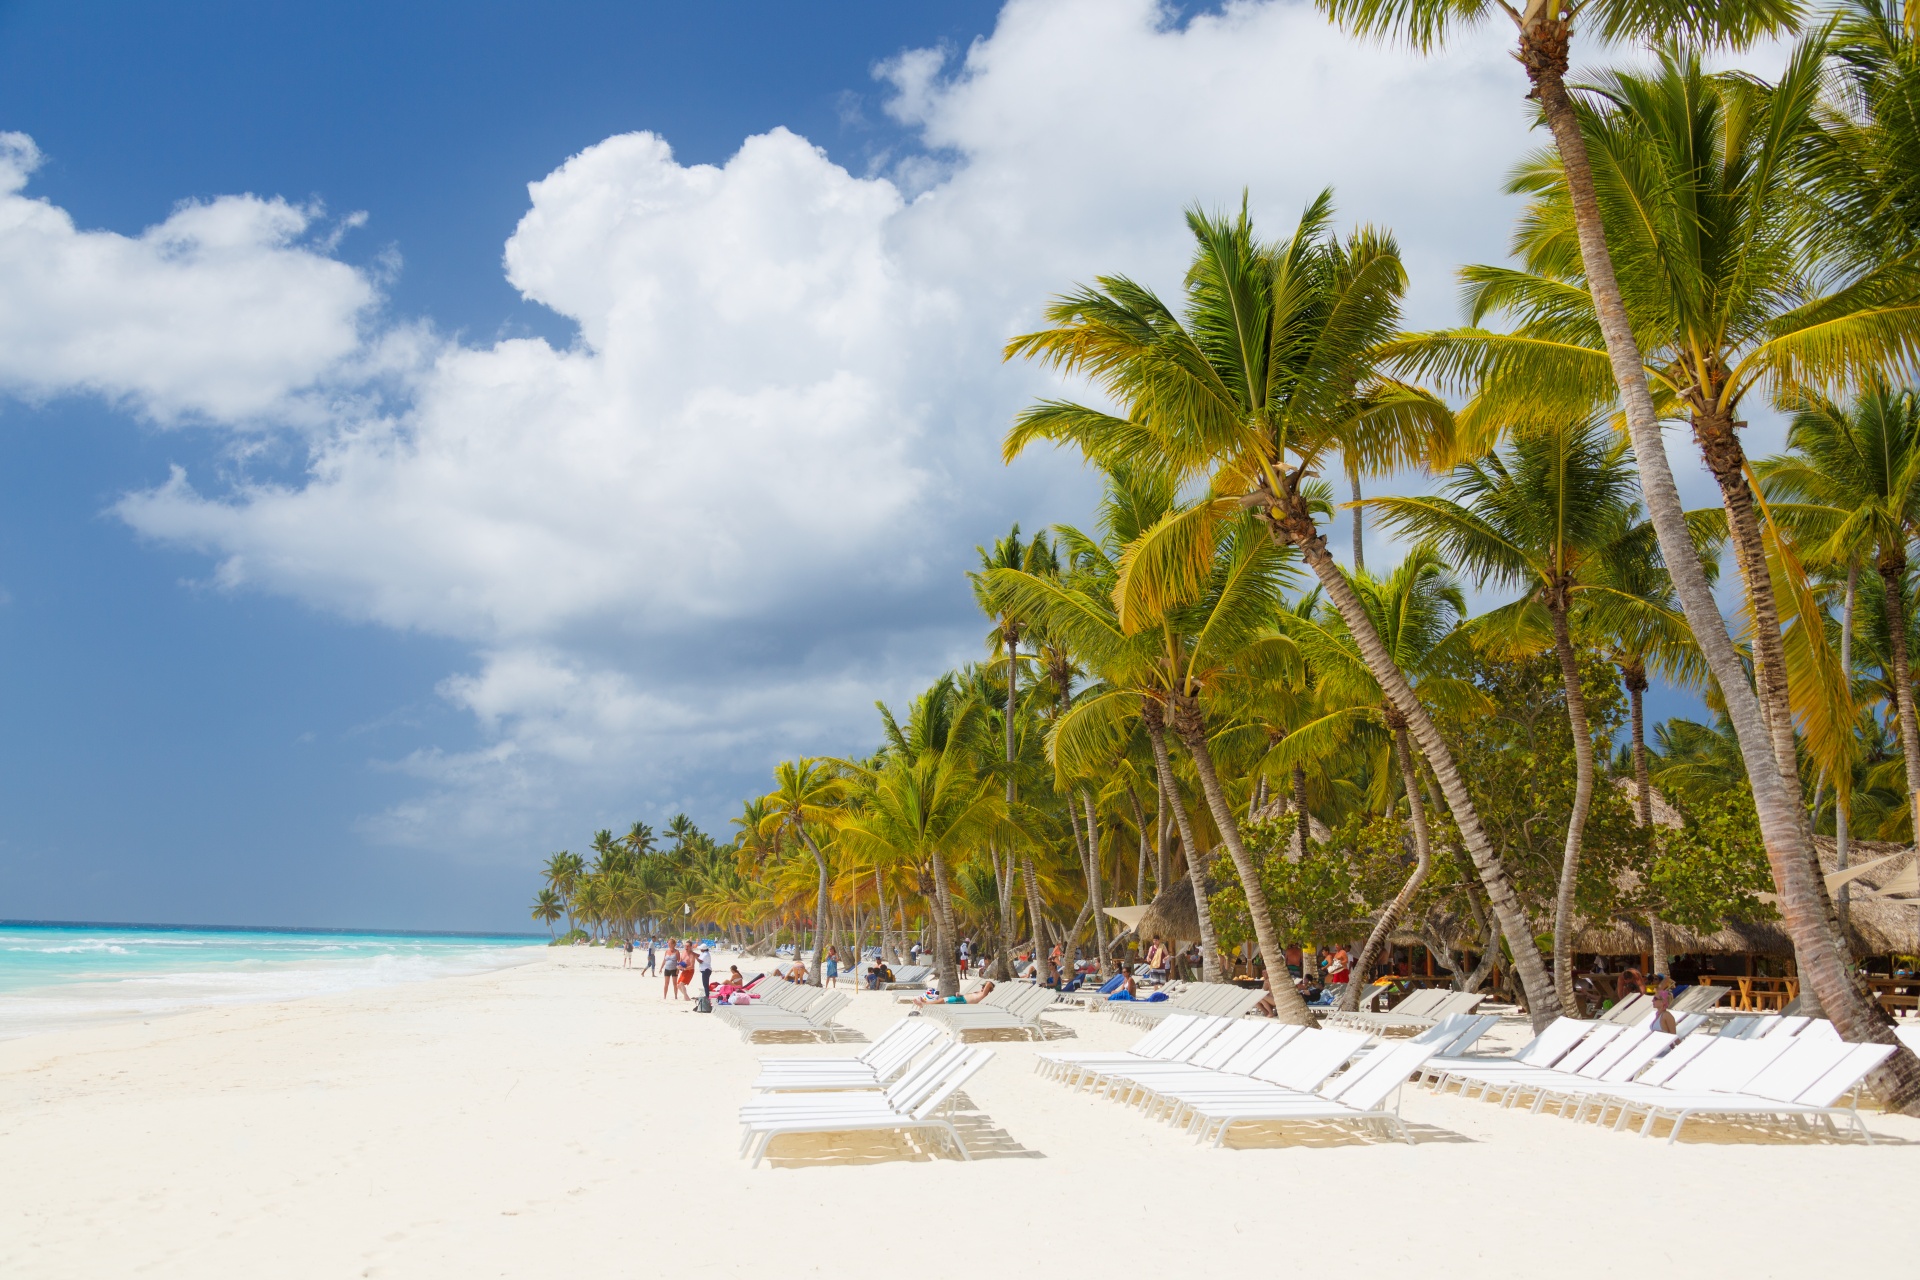 Karibik Strand mit Palmen